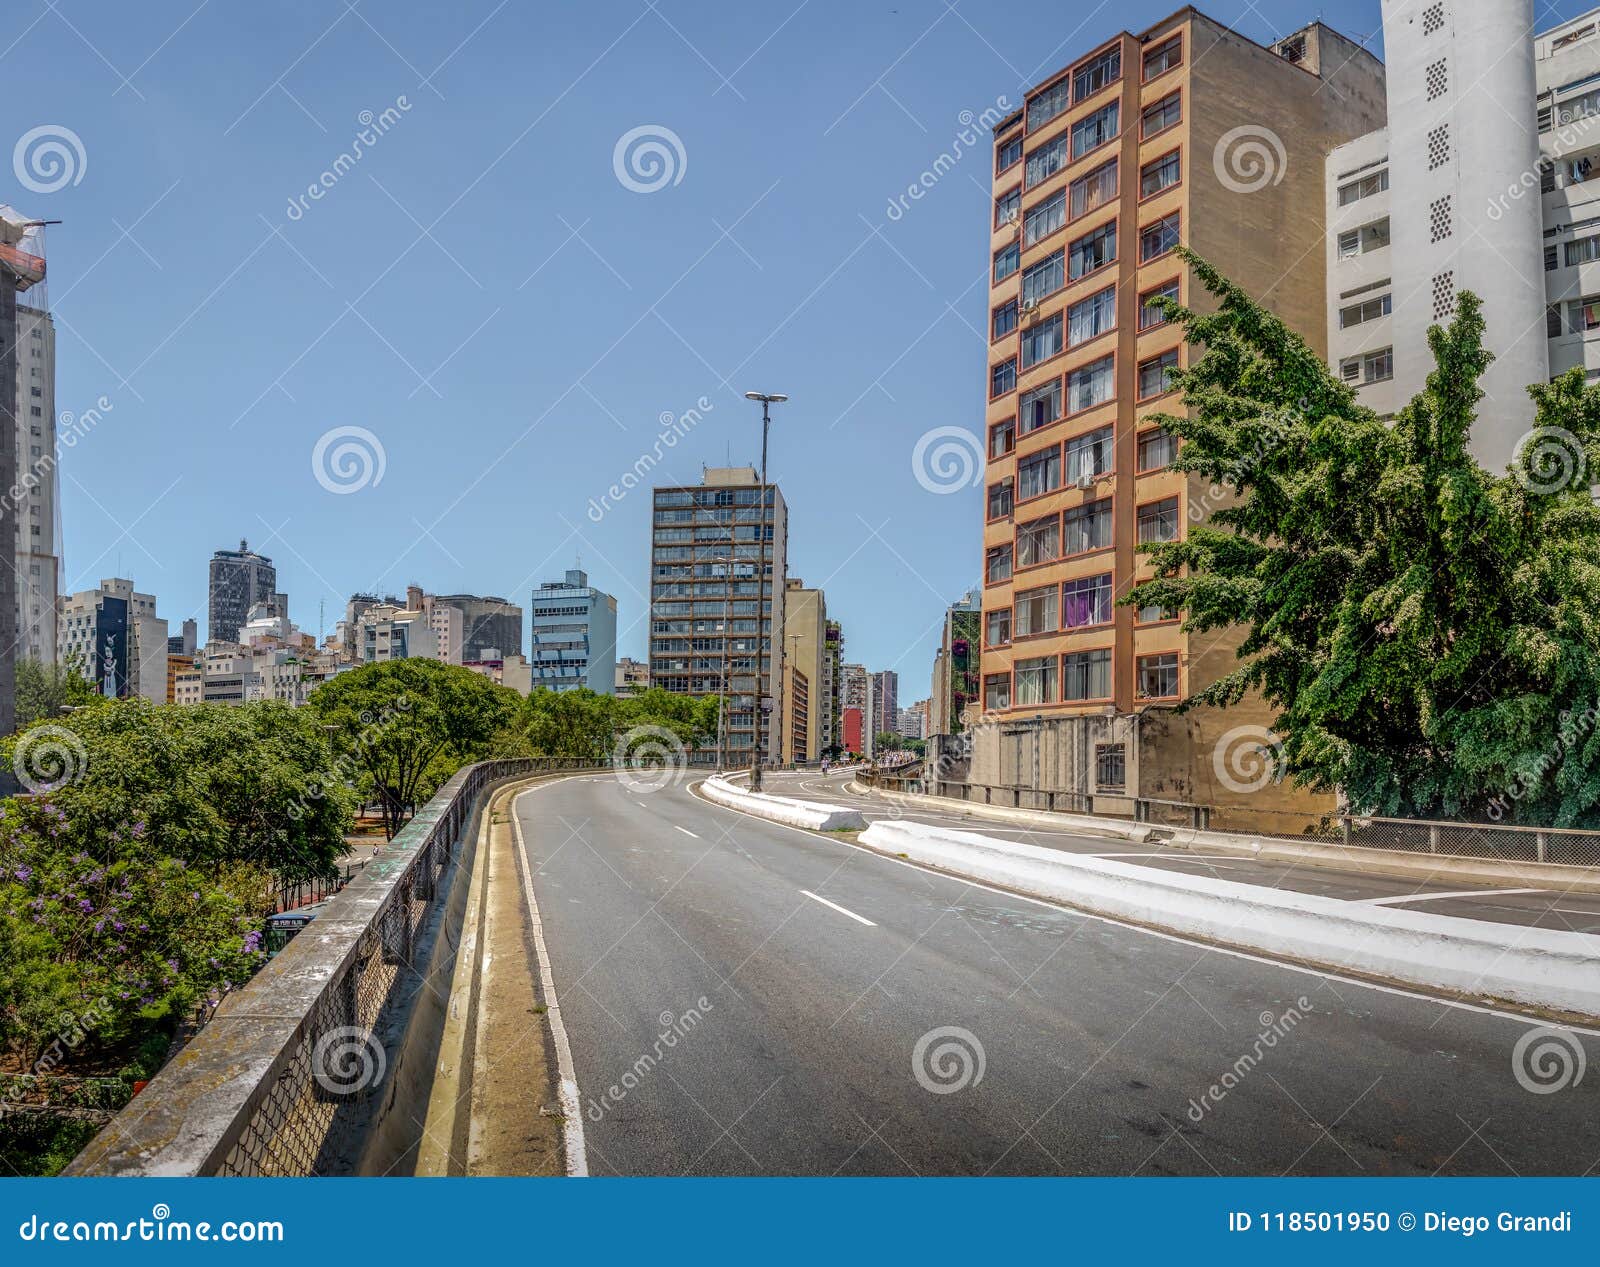 elevated highway known as minhocao elevado presidente joao goulart - sao paulo, brazil